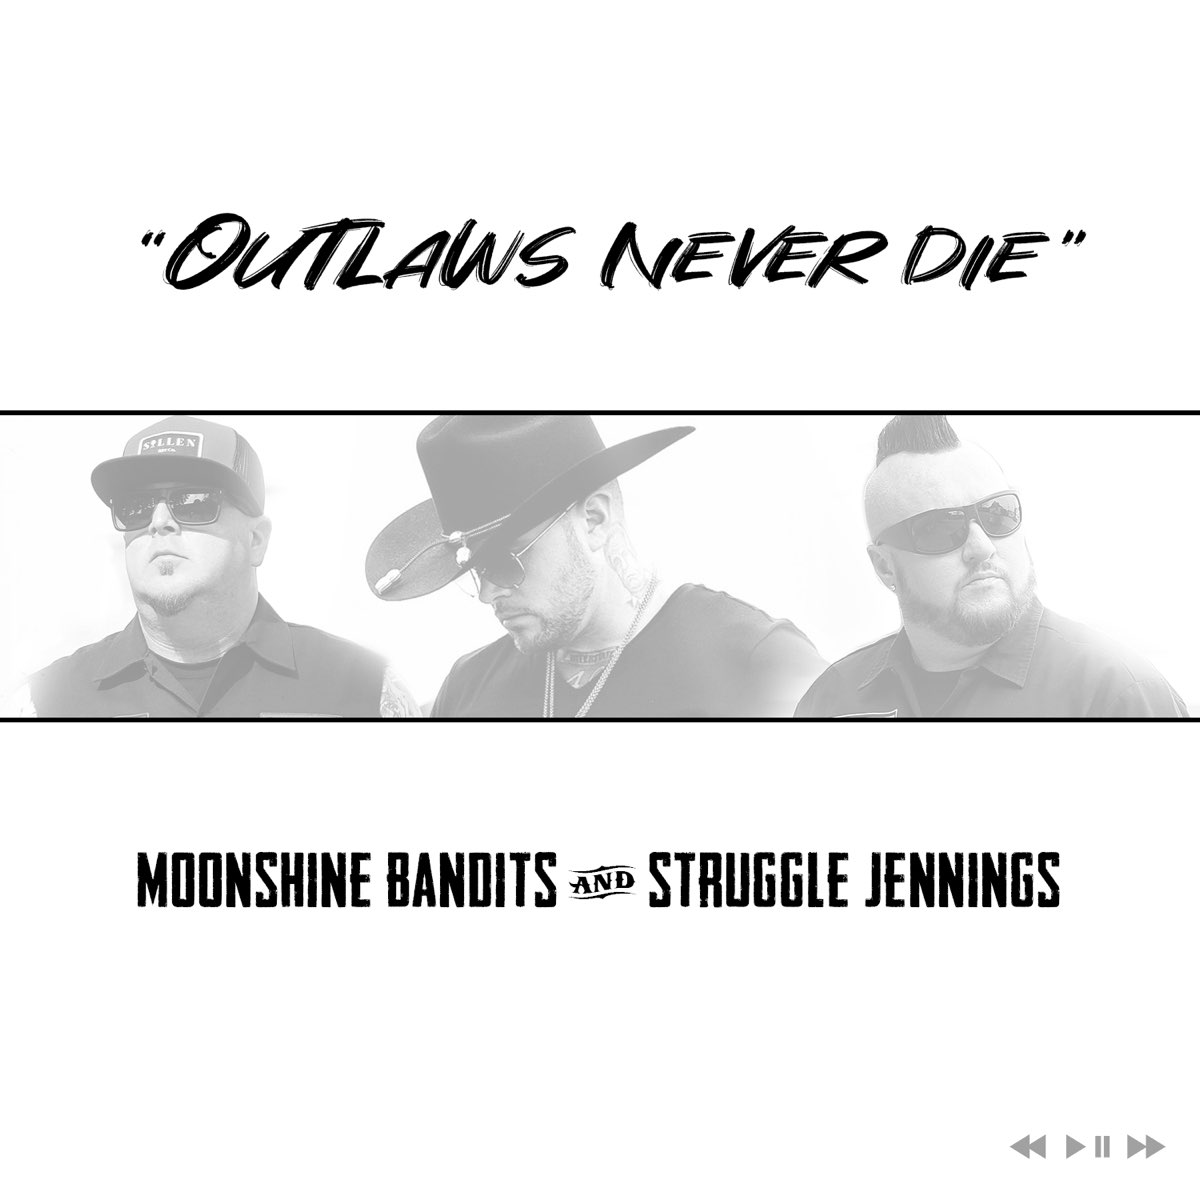 Гимн бандитов. Outlaw бандит. Never die исполнитель. "Moonshine Bandits" && ( исполнитель | группа | музыка | Music | Band | artist ) && (фото | photo). Moonshine Bandits.